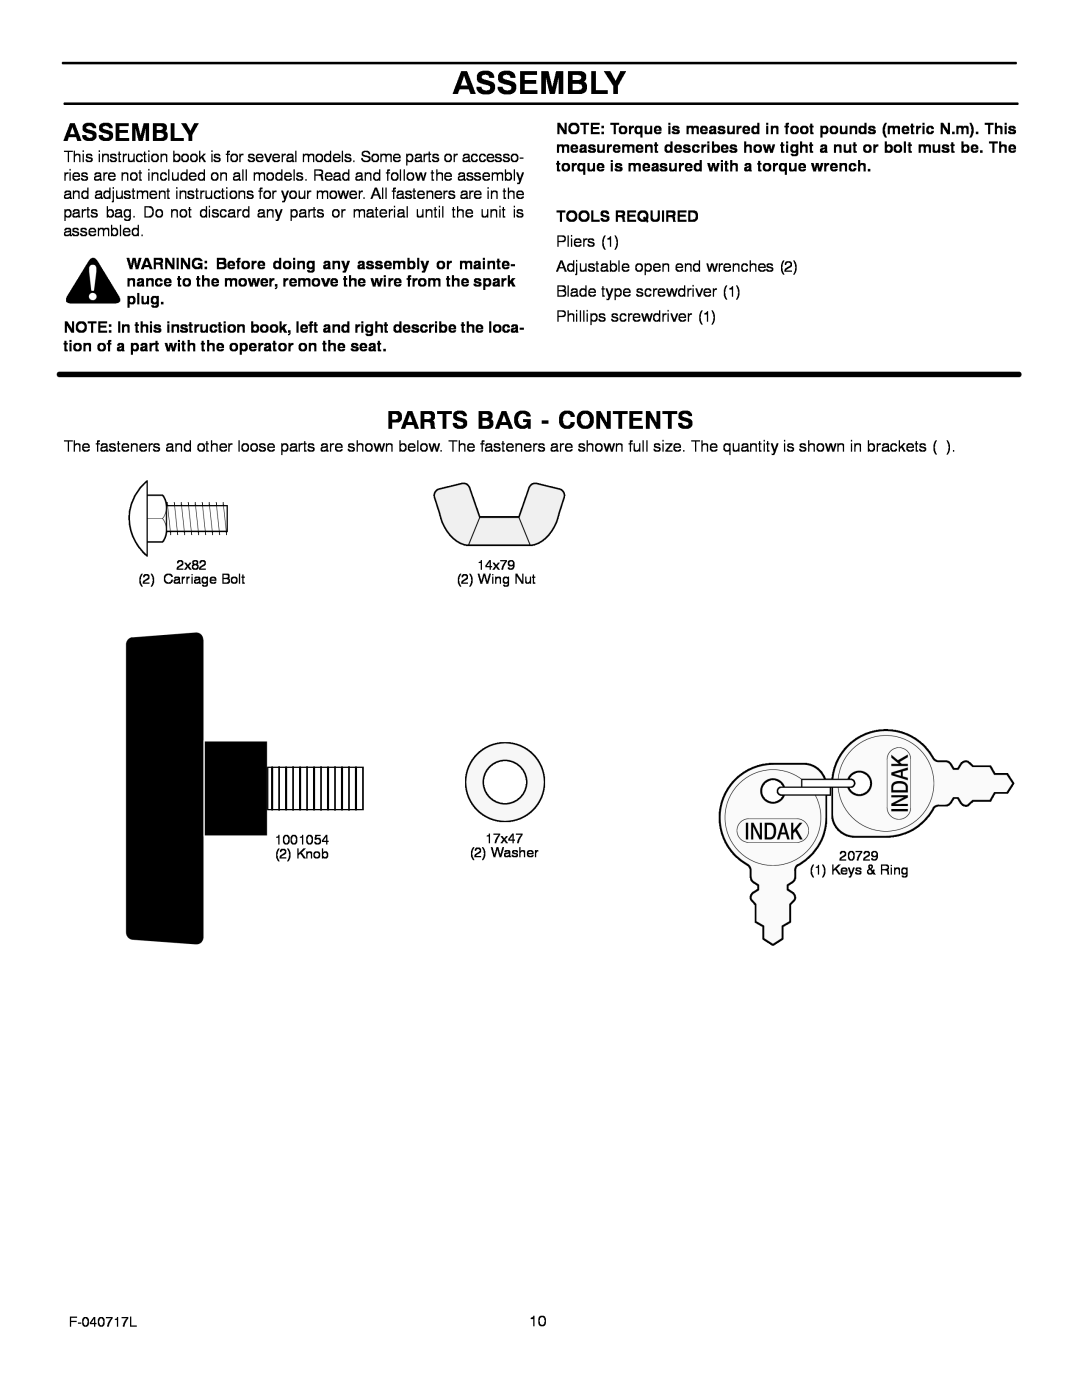 Murray 387002x92A manual Assembly, Parts Bag - Contents 